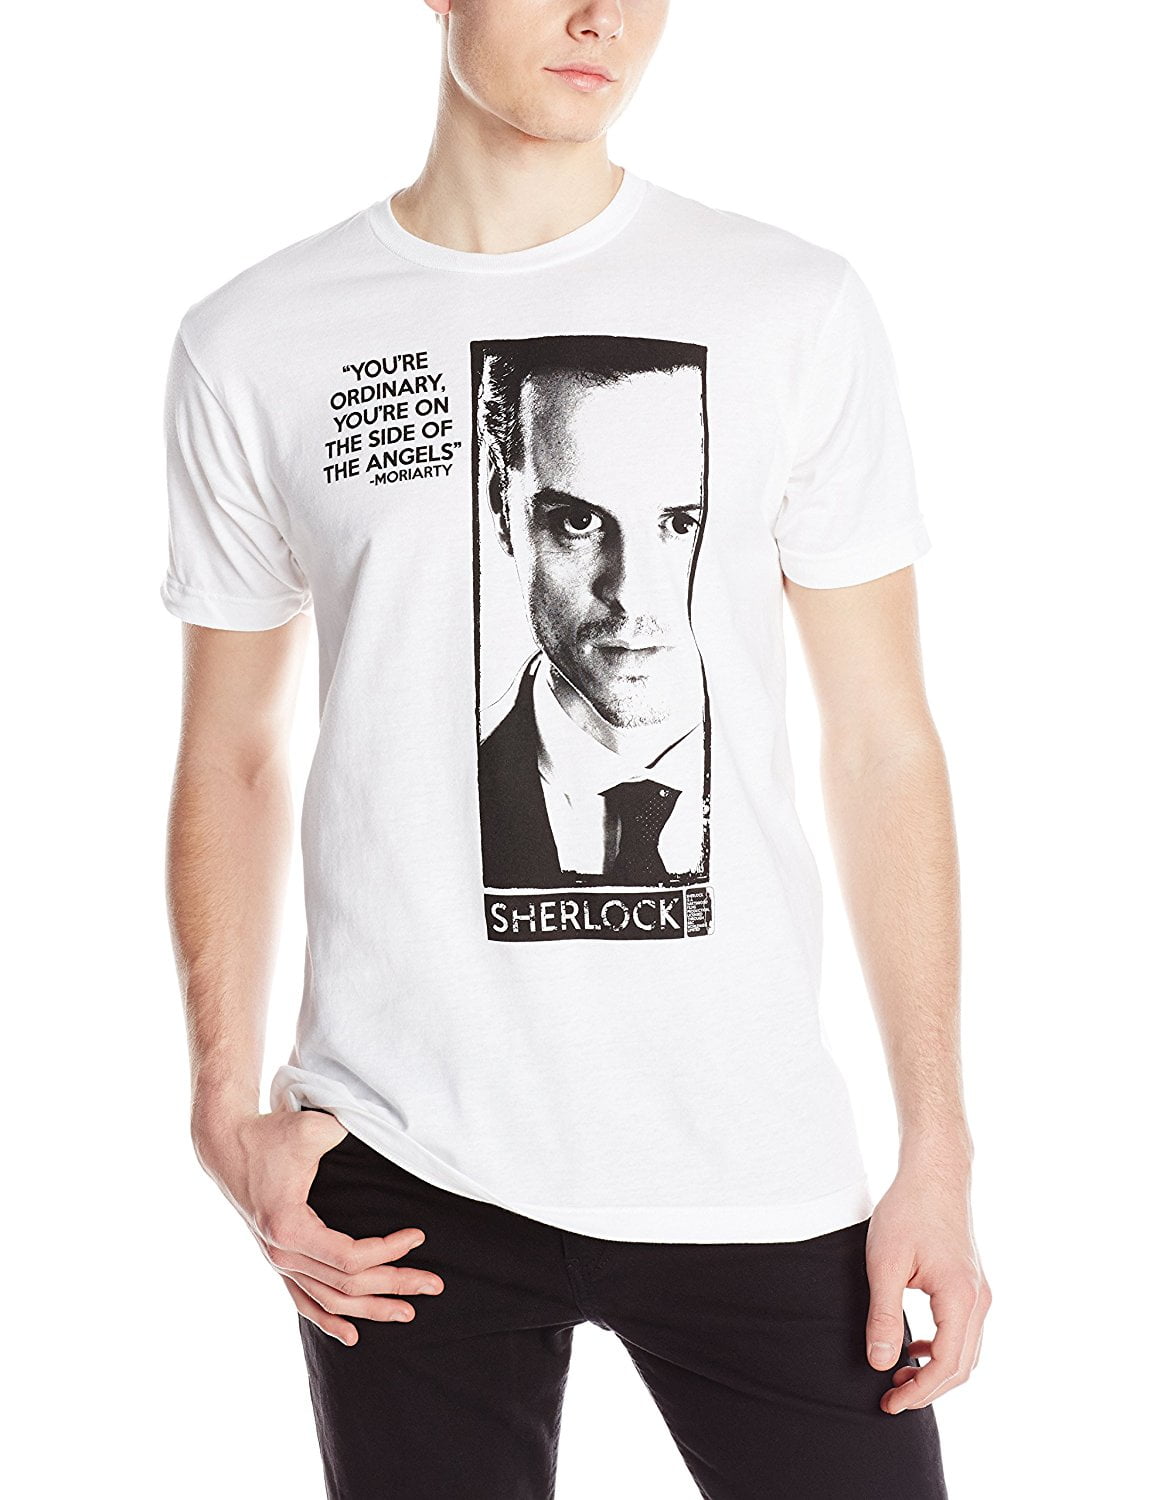 Moriarty Art T-Shirt Men's Women's All Sizes Sherlock Series Tee